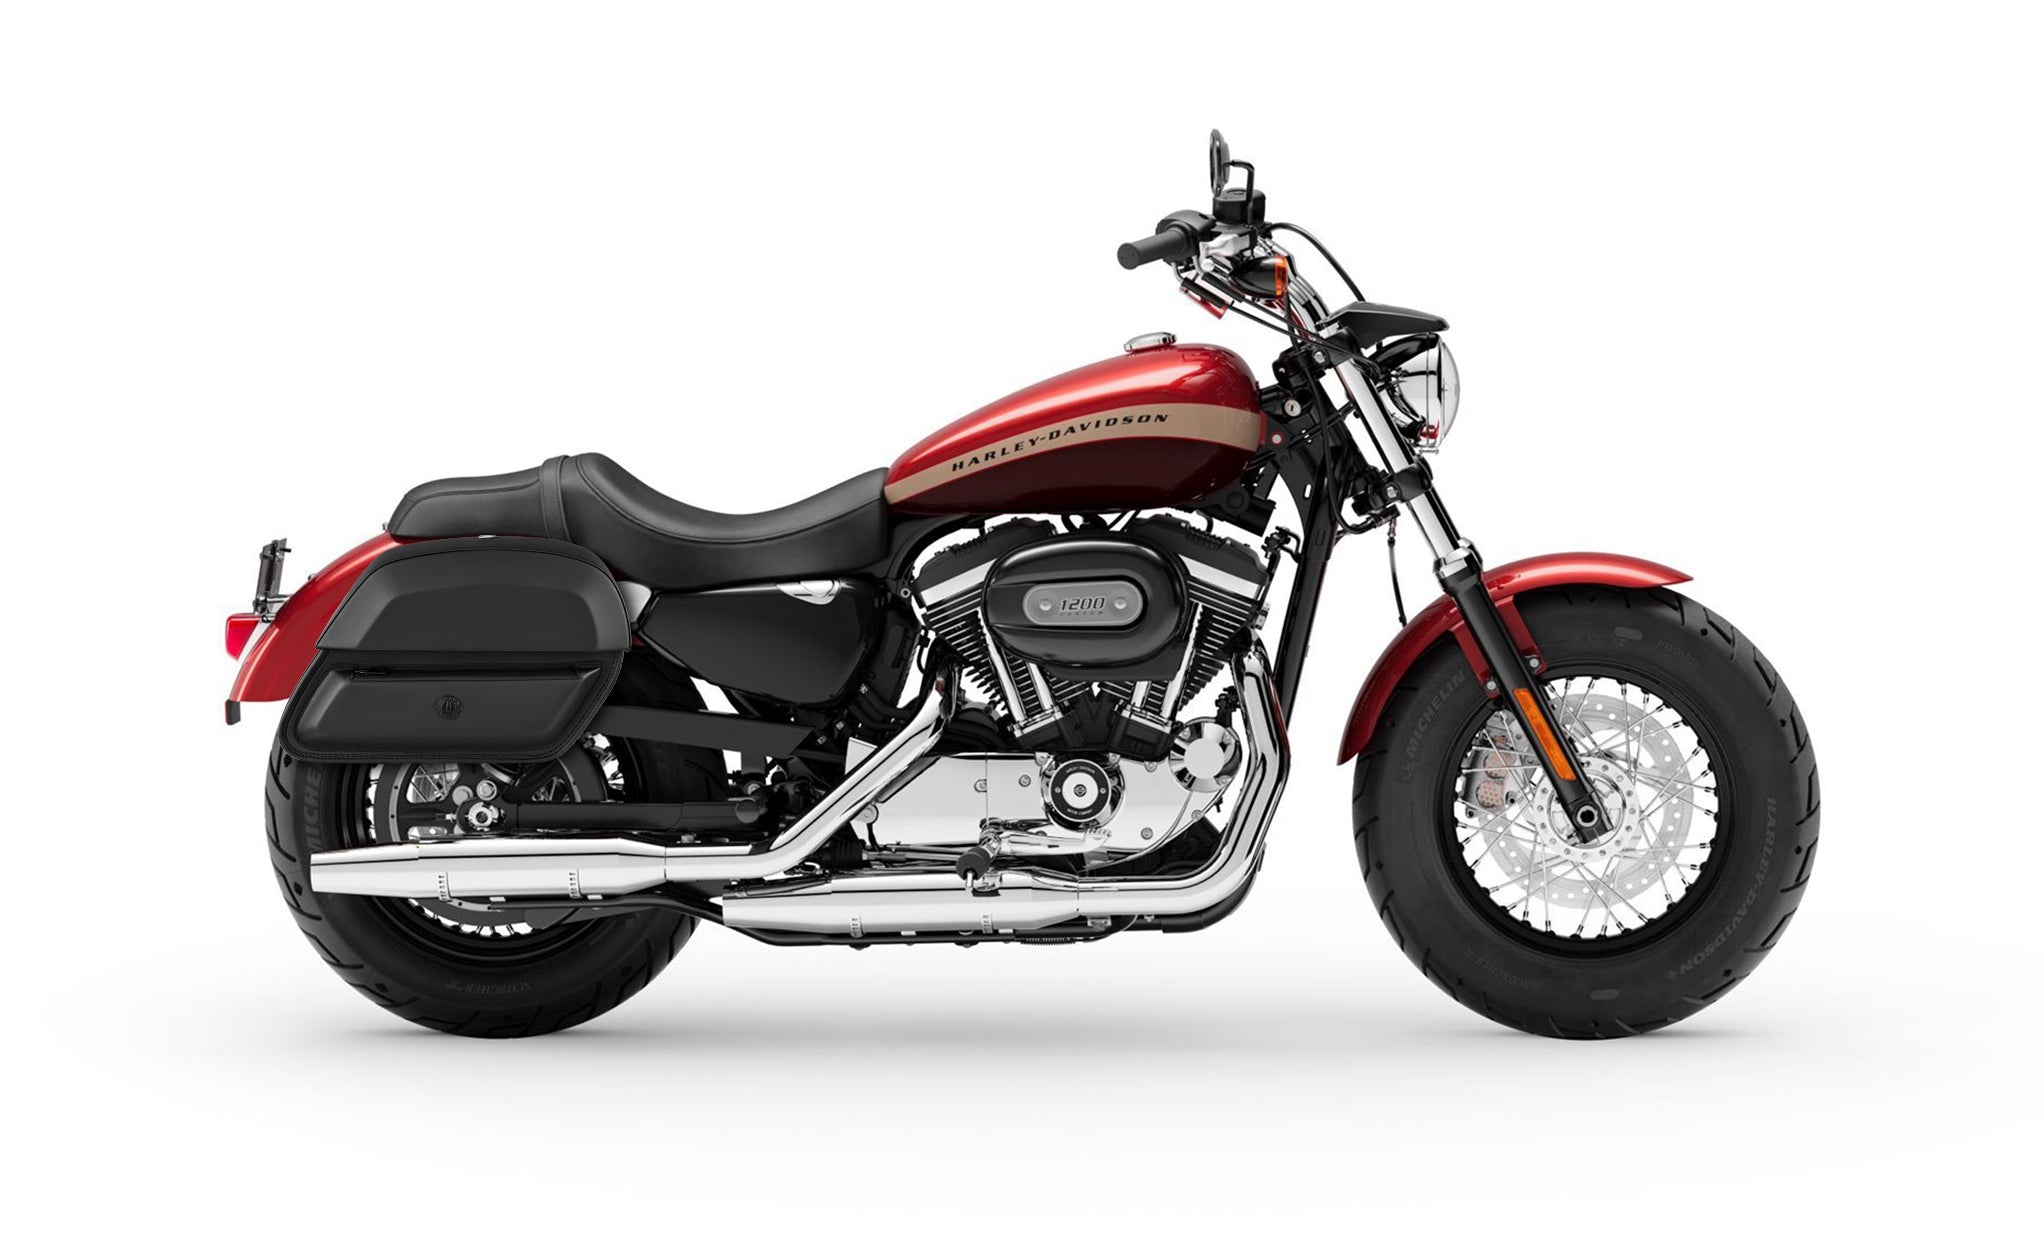 28L - Pantheon Medium Quick-Mount Motorcycle Saddlebags For Harley Sportster 1200 Custom XL1200C/XLH1200C @expand